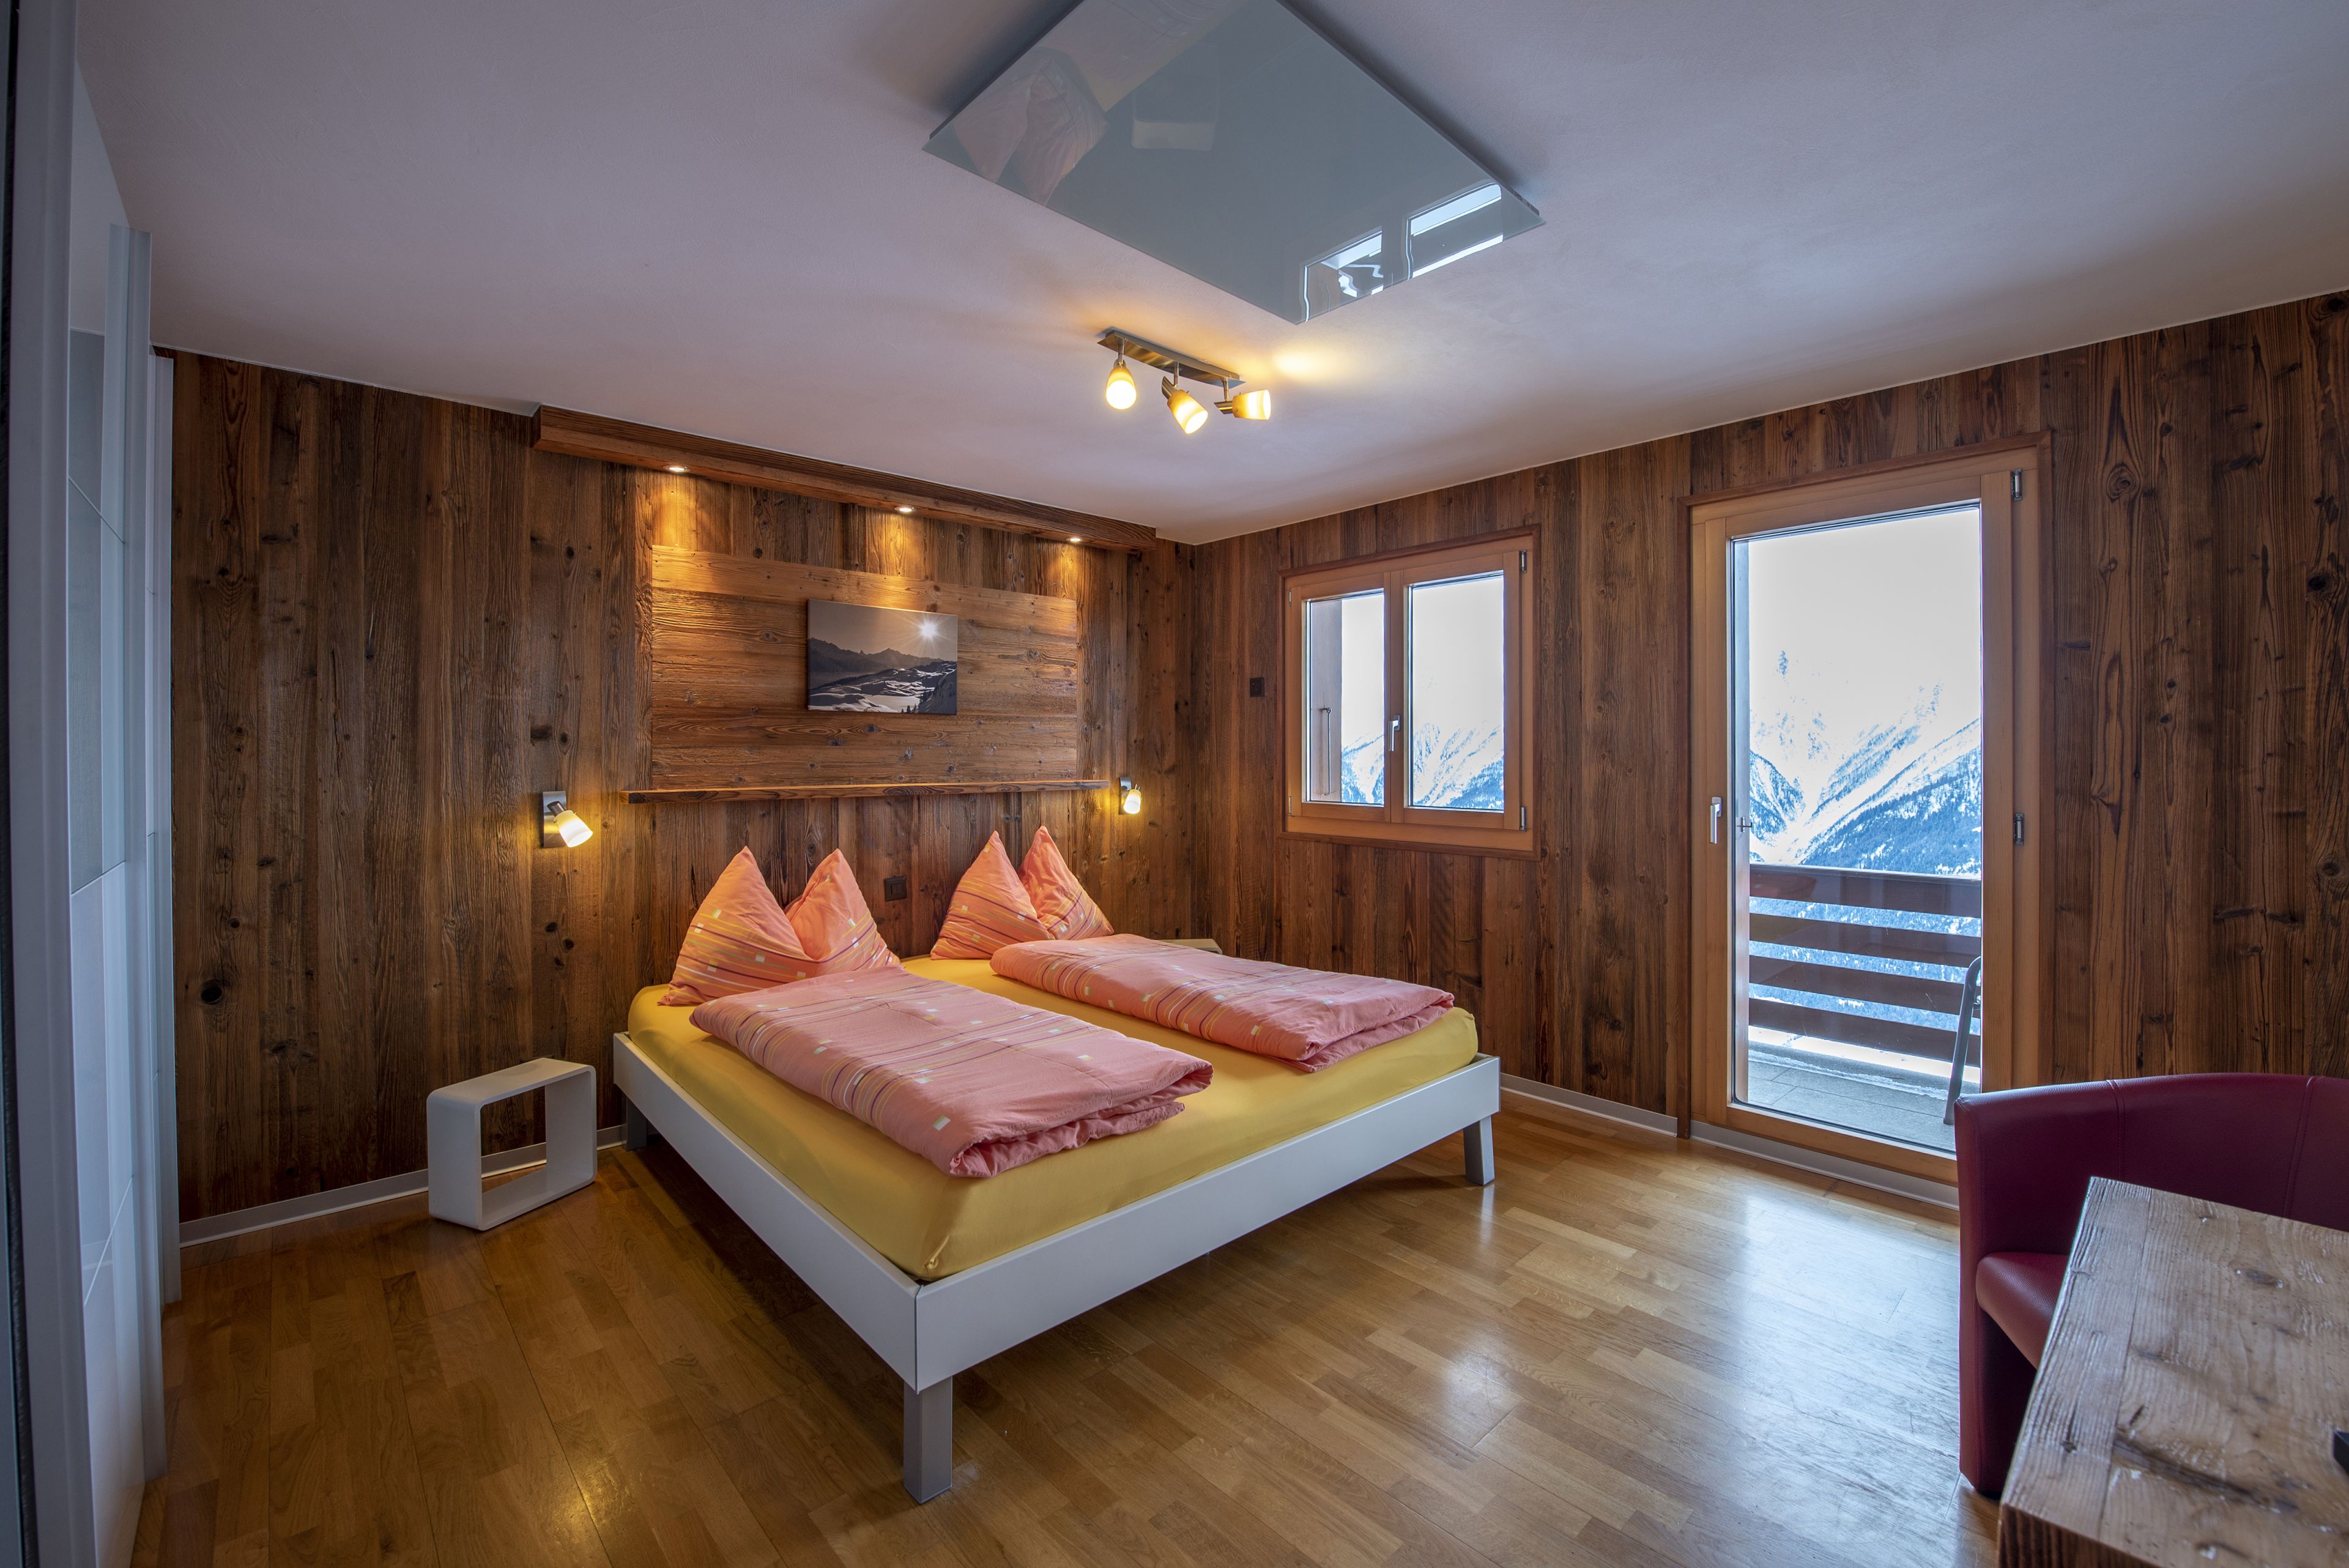 Hôtel Slalom, Bettmeralp, Valais, Suisse